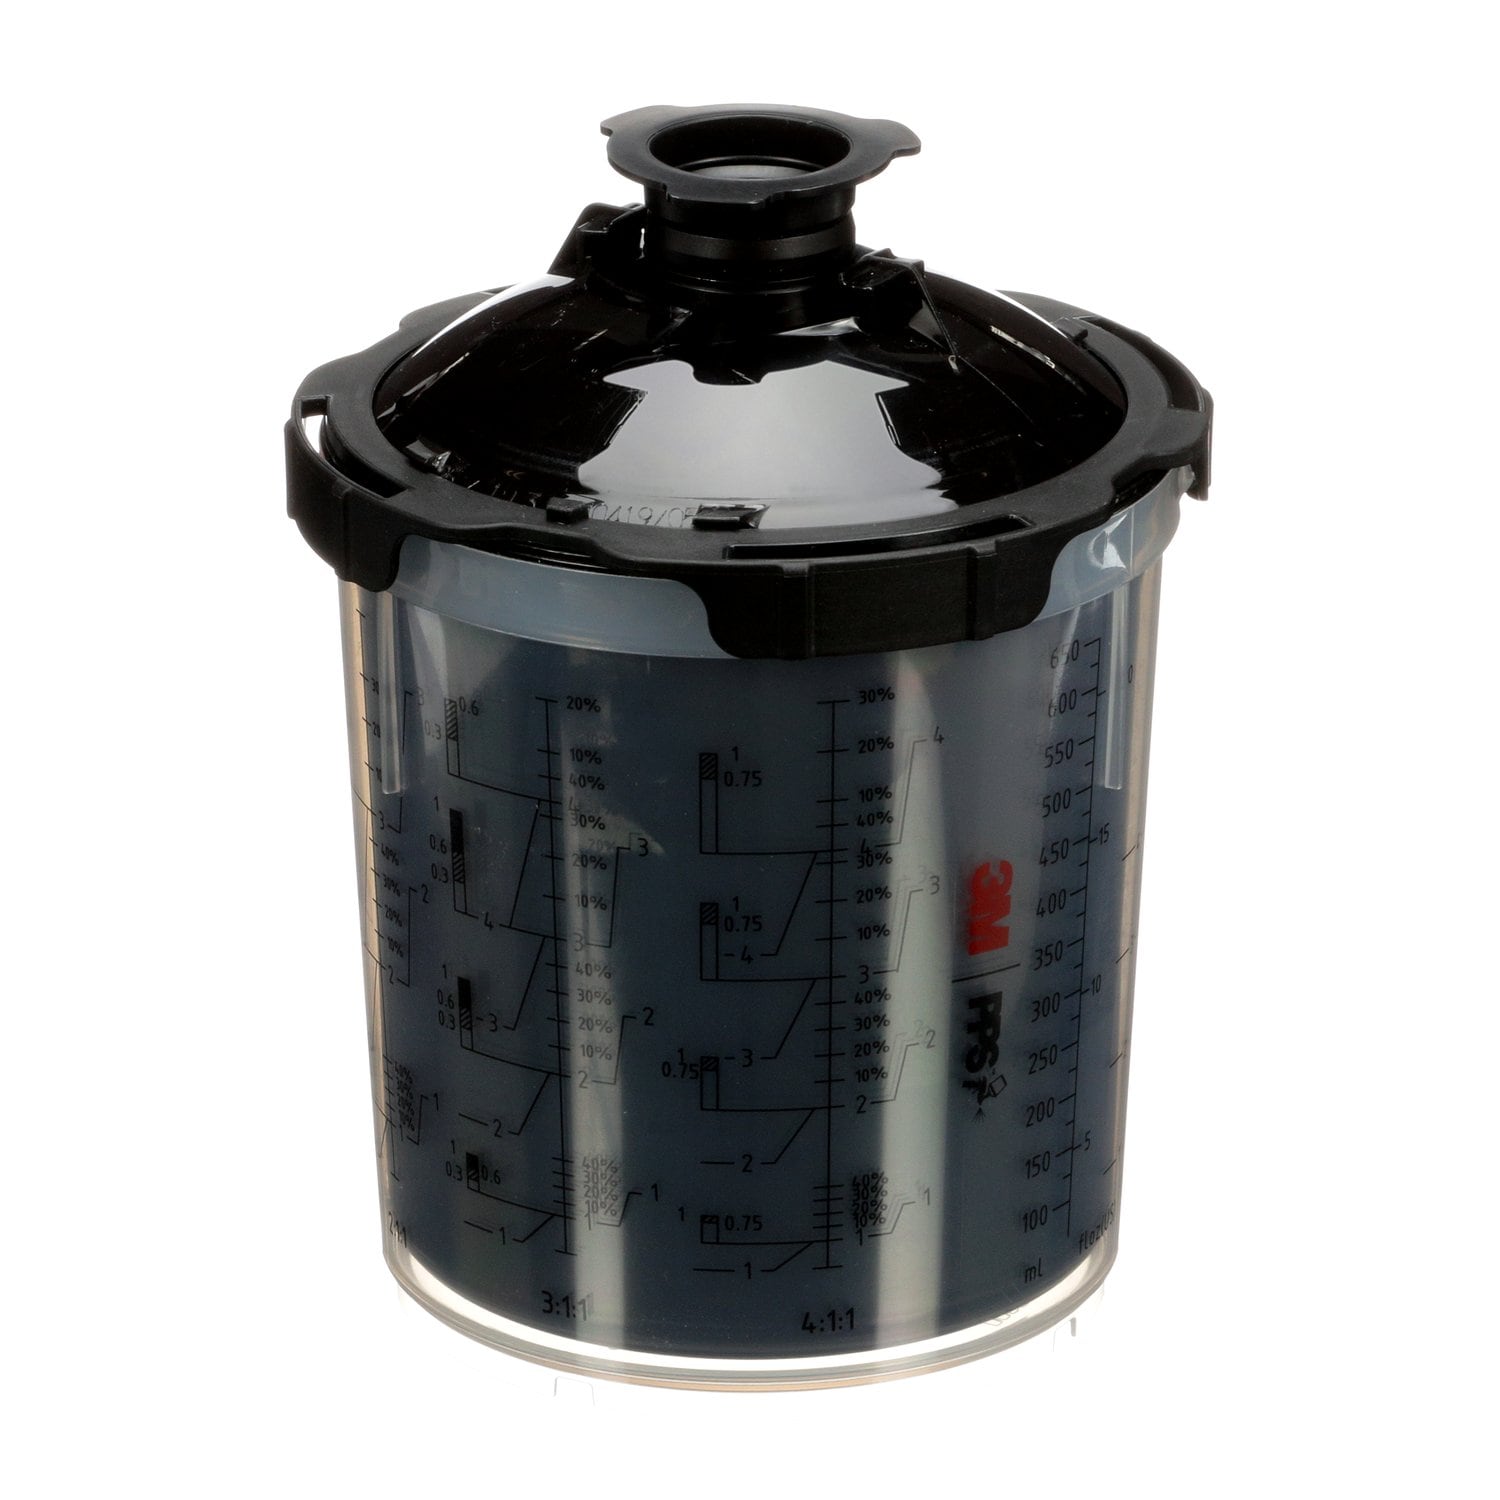 7100298477 - 3M PPS Series 2.0 Spray Cup System UV Kit 26710, Standard (22 fl oz, 650 mL), 200 Micron Filter, 1 Kit/Case